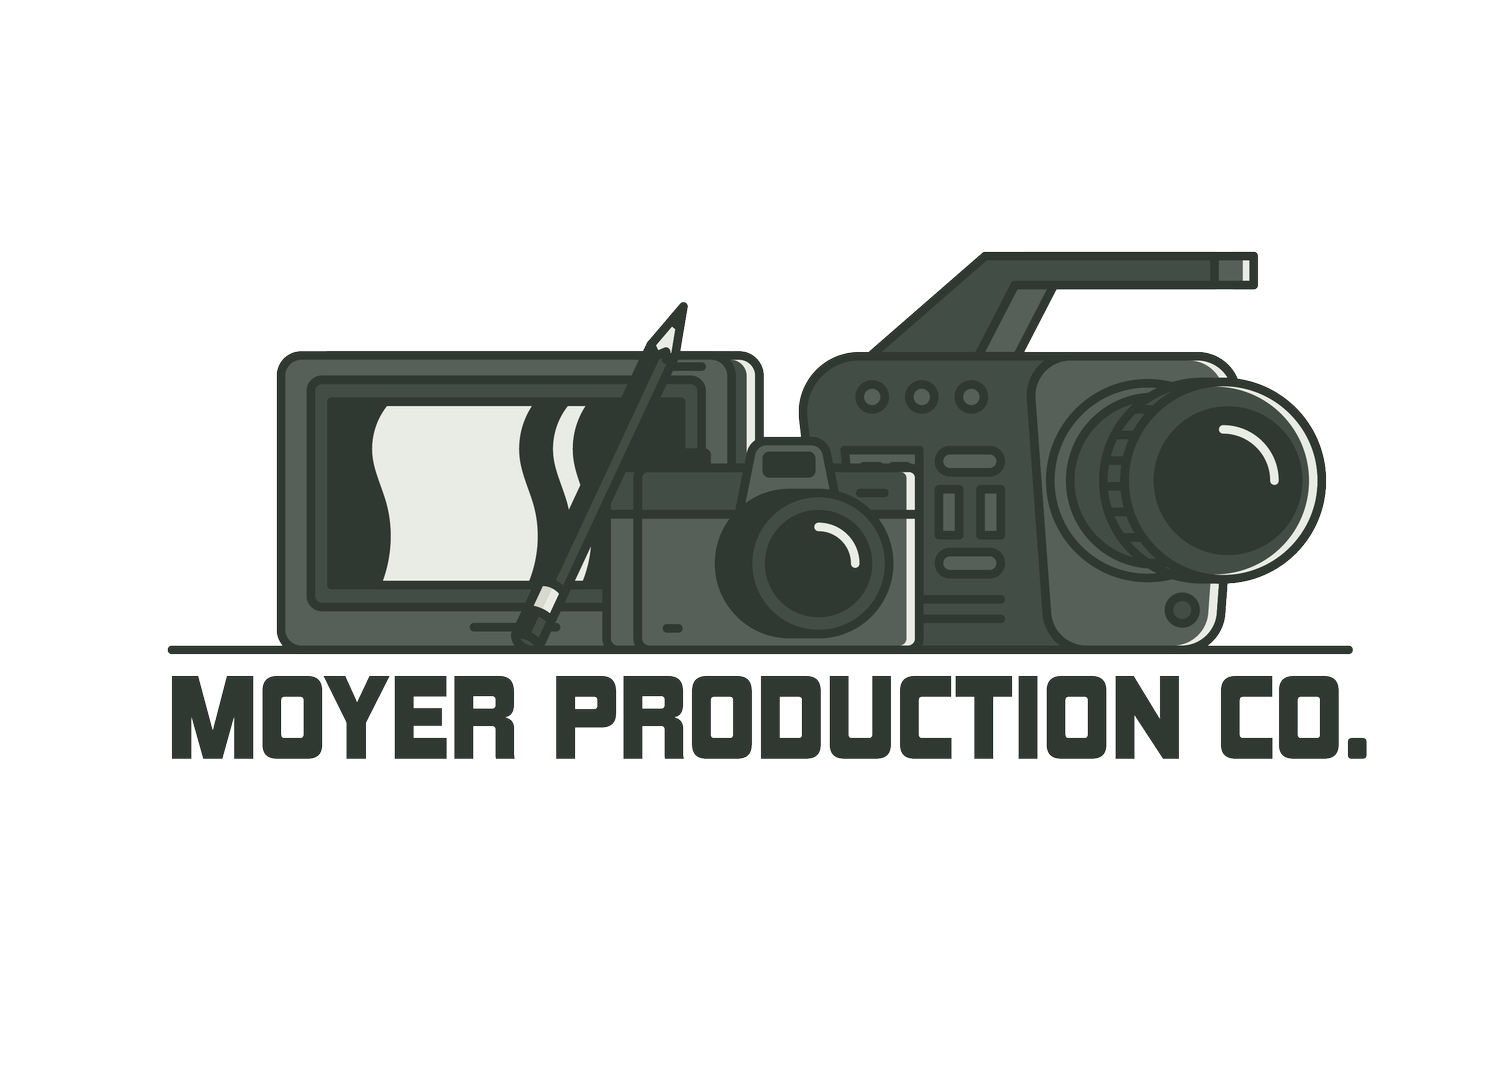 Moyer Production Co. LLC